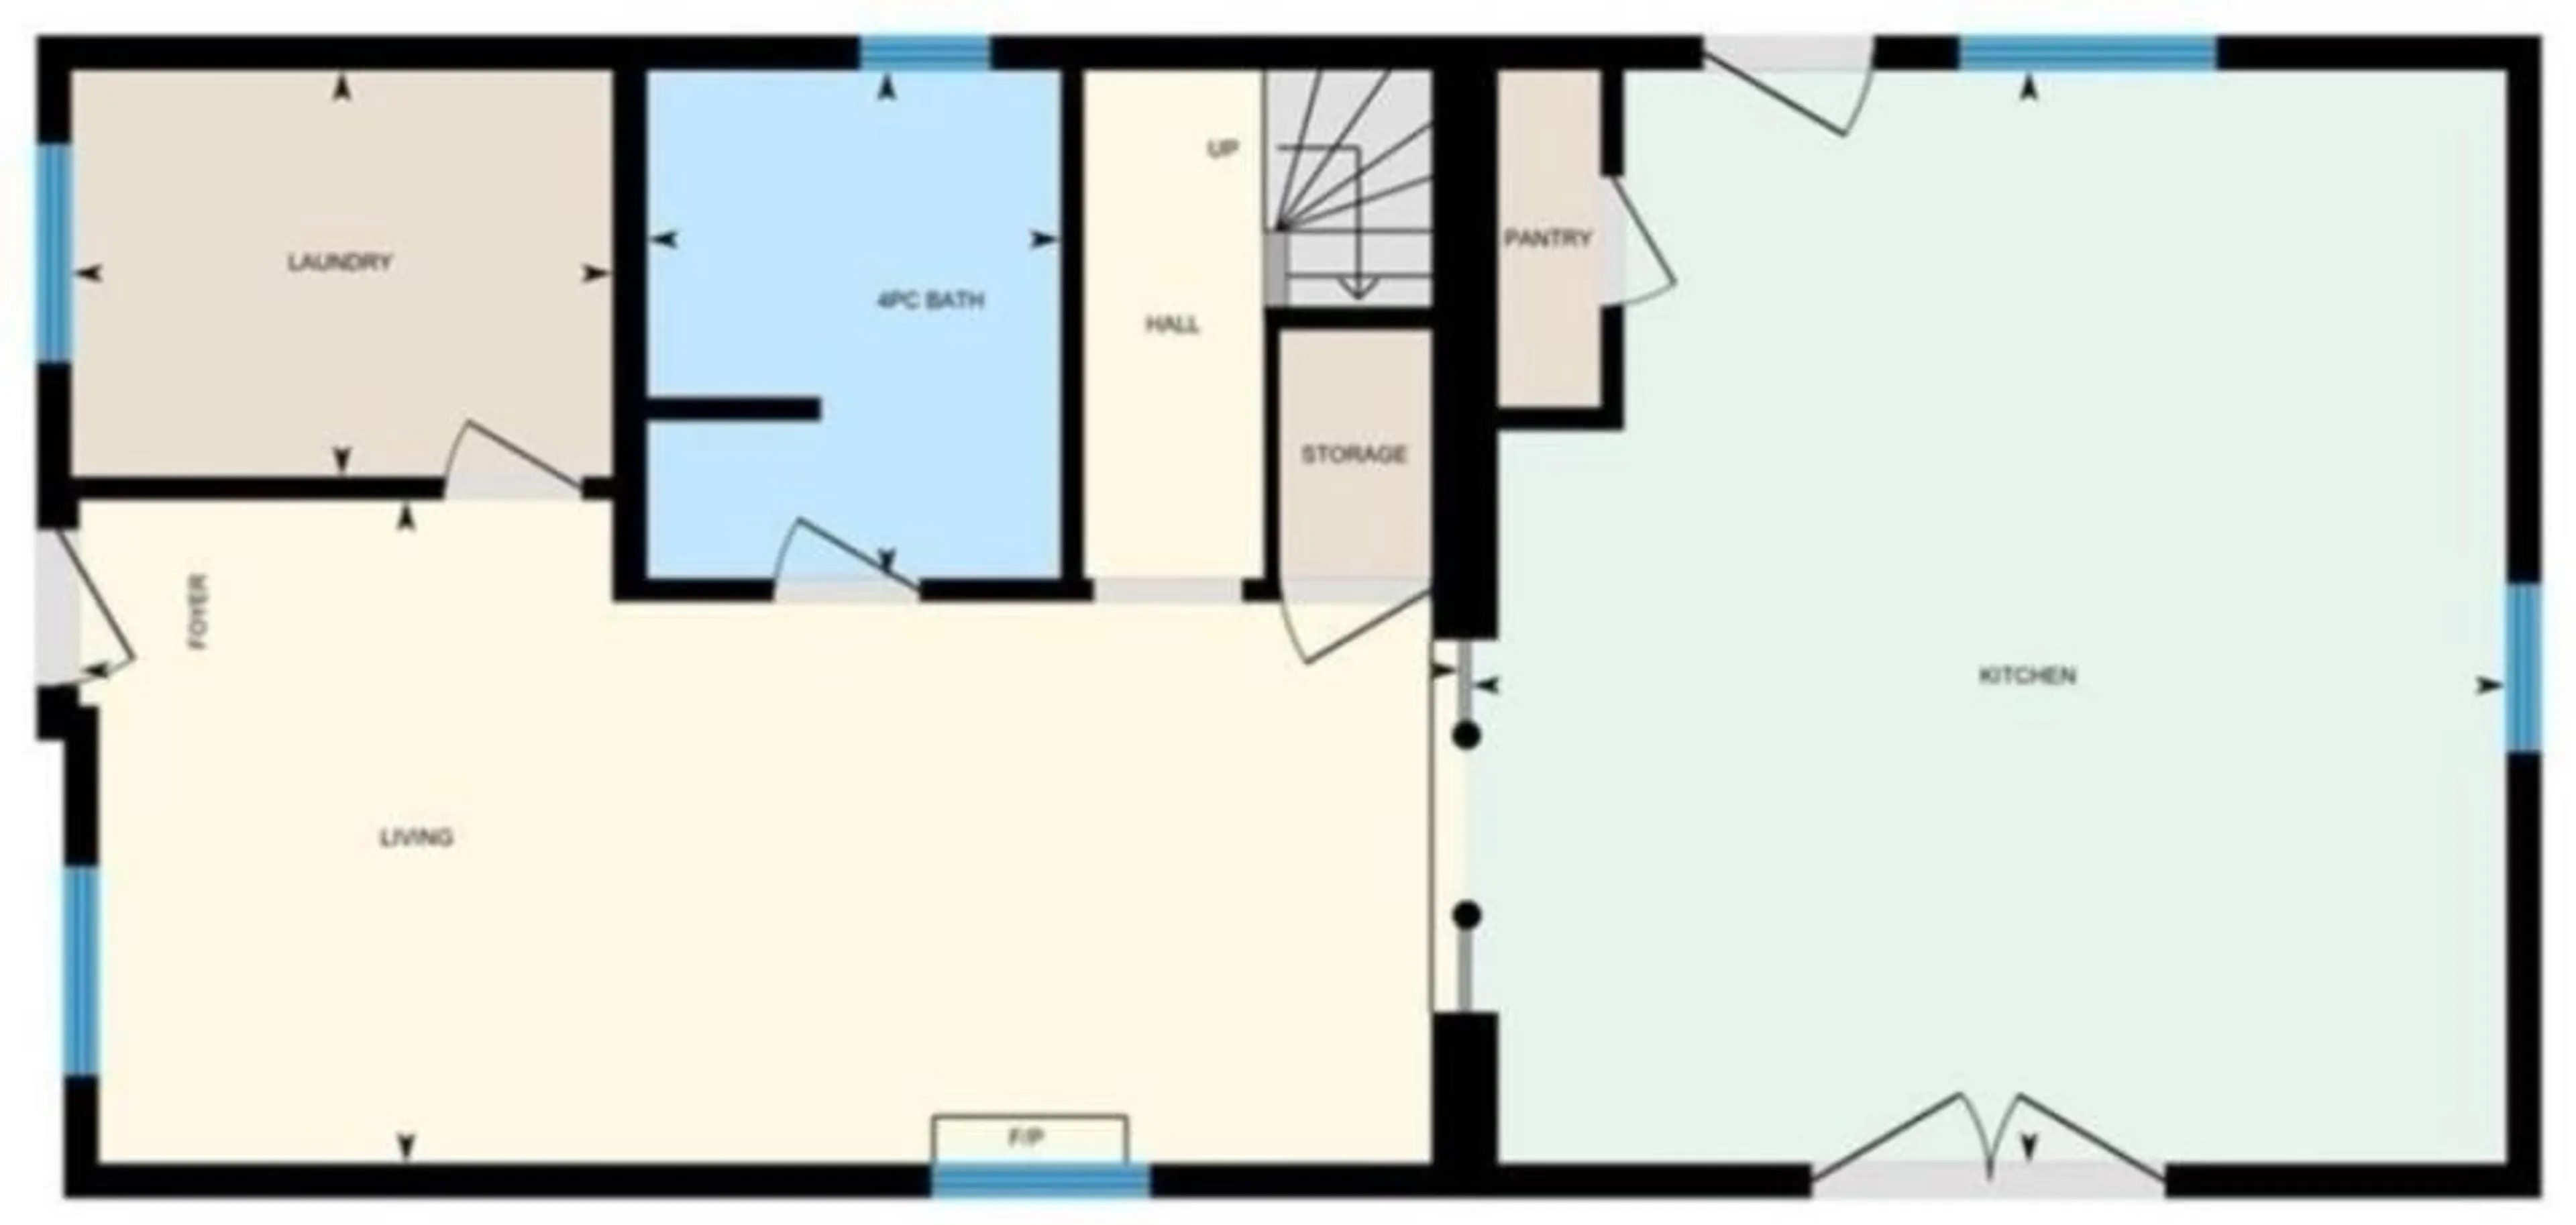 Floor plan for 48 GERNISH St, Alexandria Ontario K0C 1A0